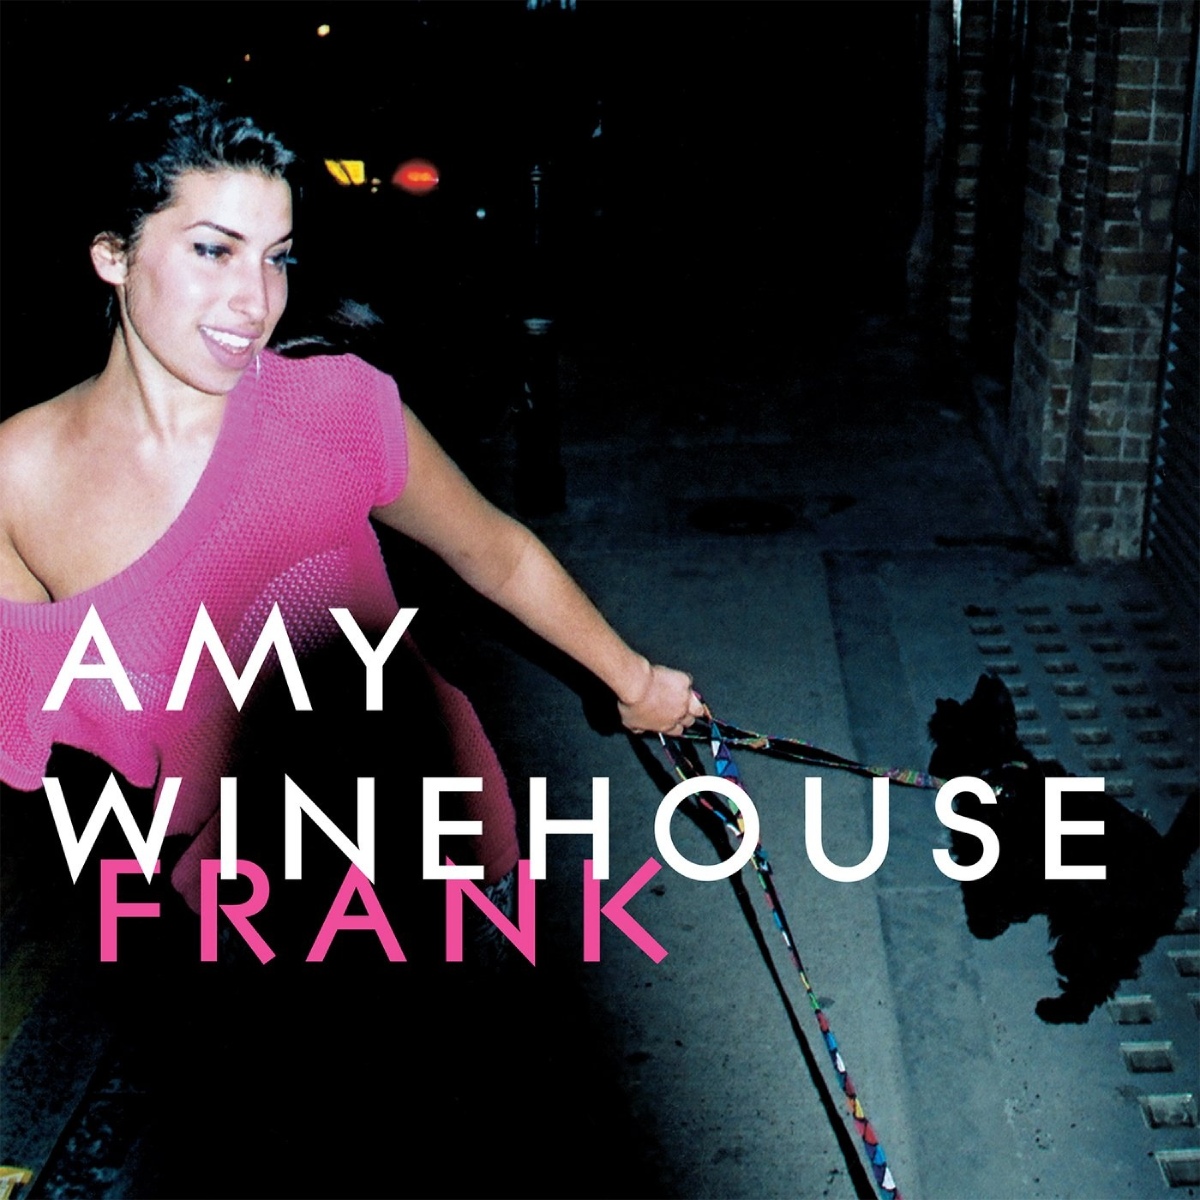 Cover des Albums "Frank" von Amy Winehouse